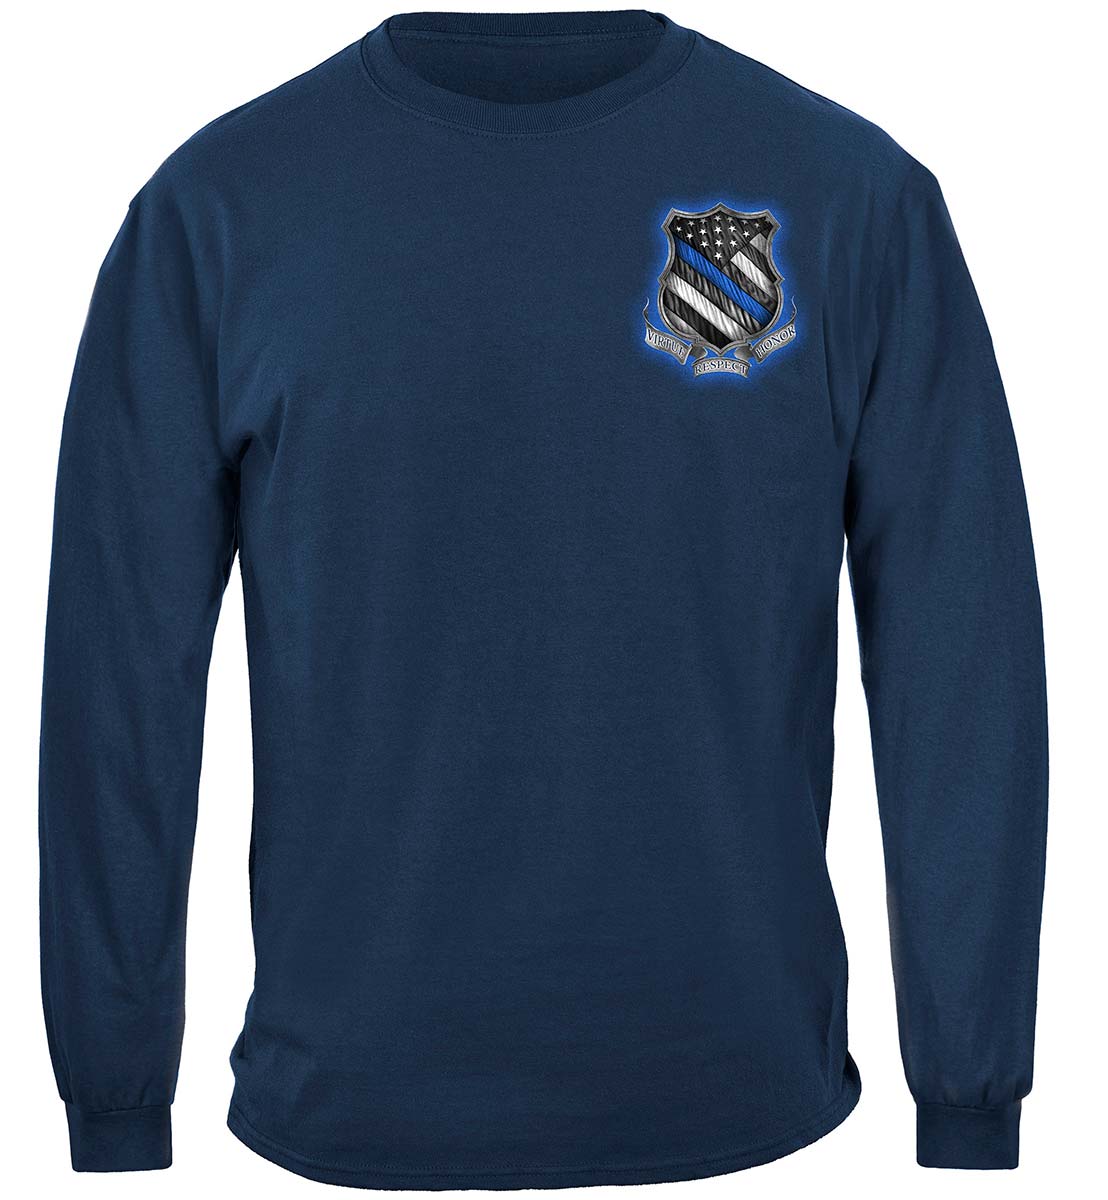 Law enforcement Back the Blue Virtue Respect Honor Premium Hooded Sweat Shirt